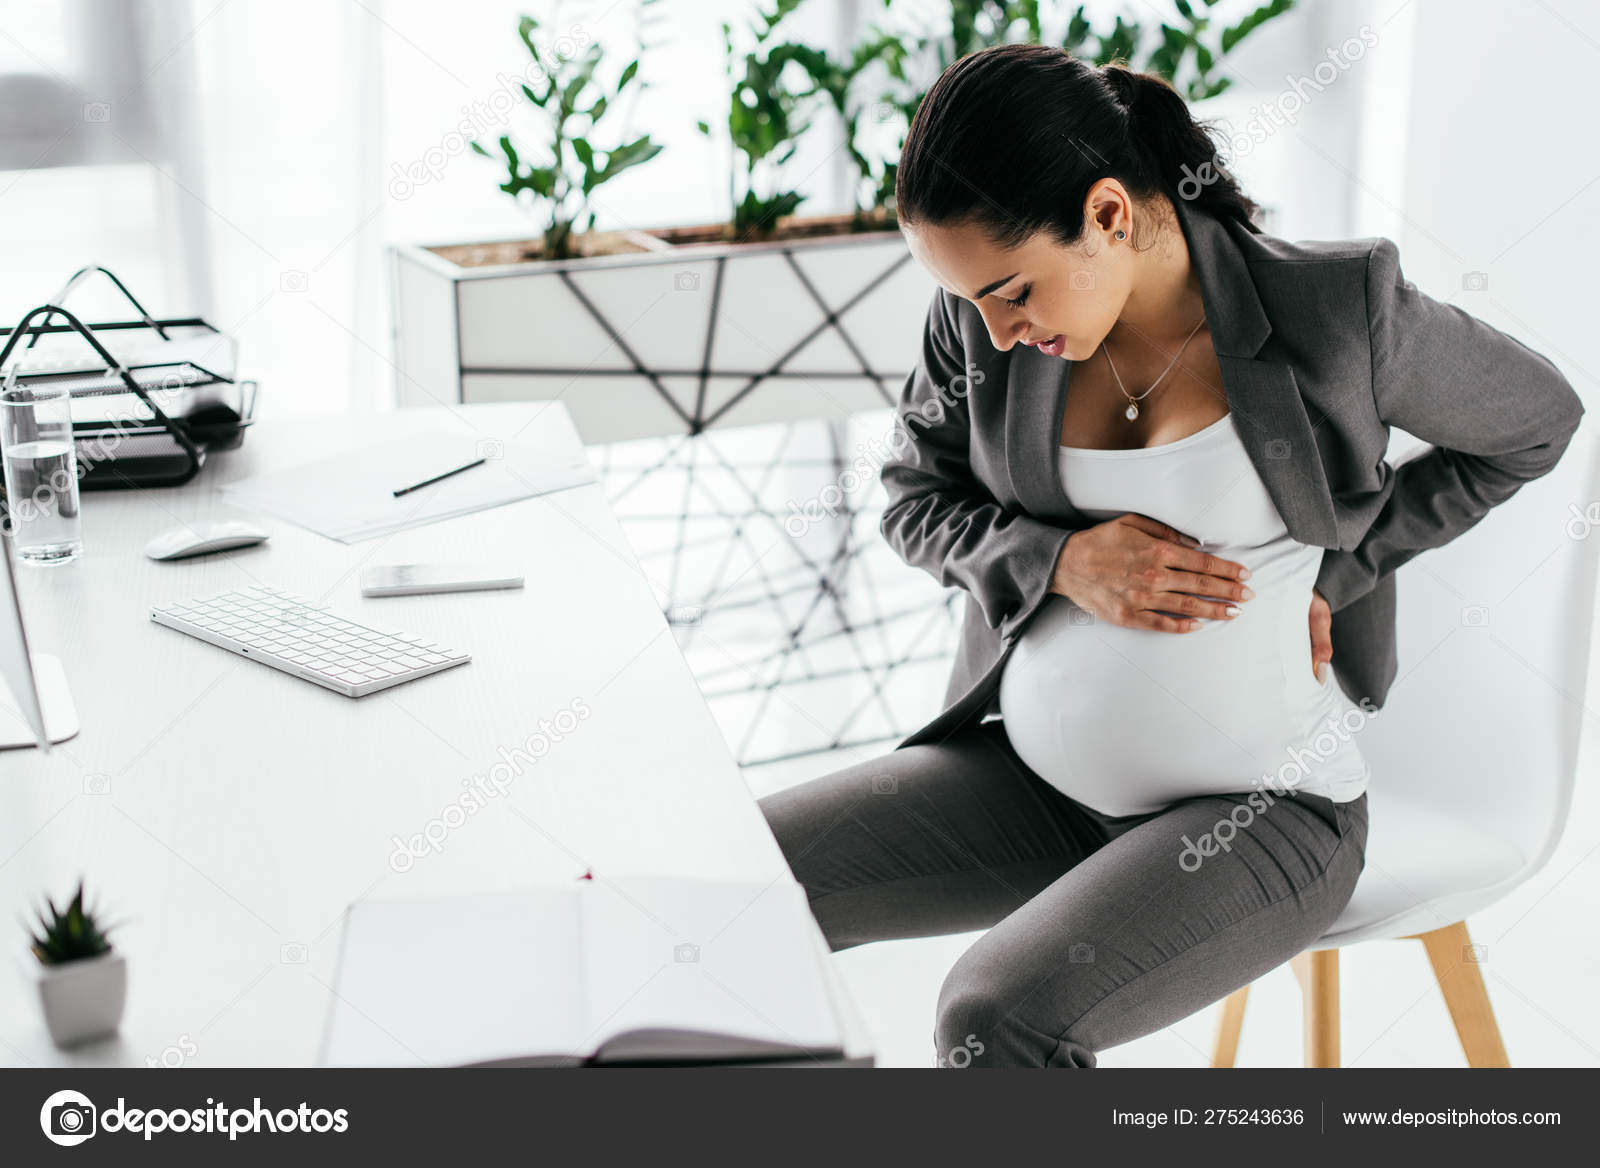 https://st4.depositphotos.com/20363444/27524/i/1600/depositphotos_275243636-stock-photo-pregnant-woman-sitting-chair-table.jpg